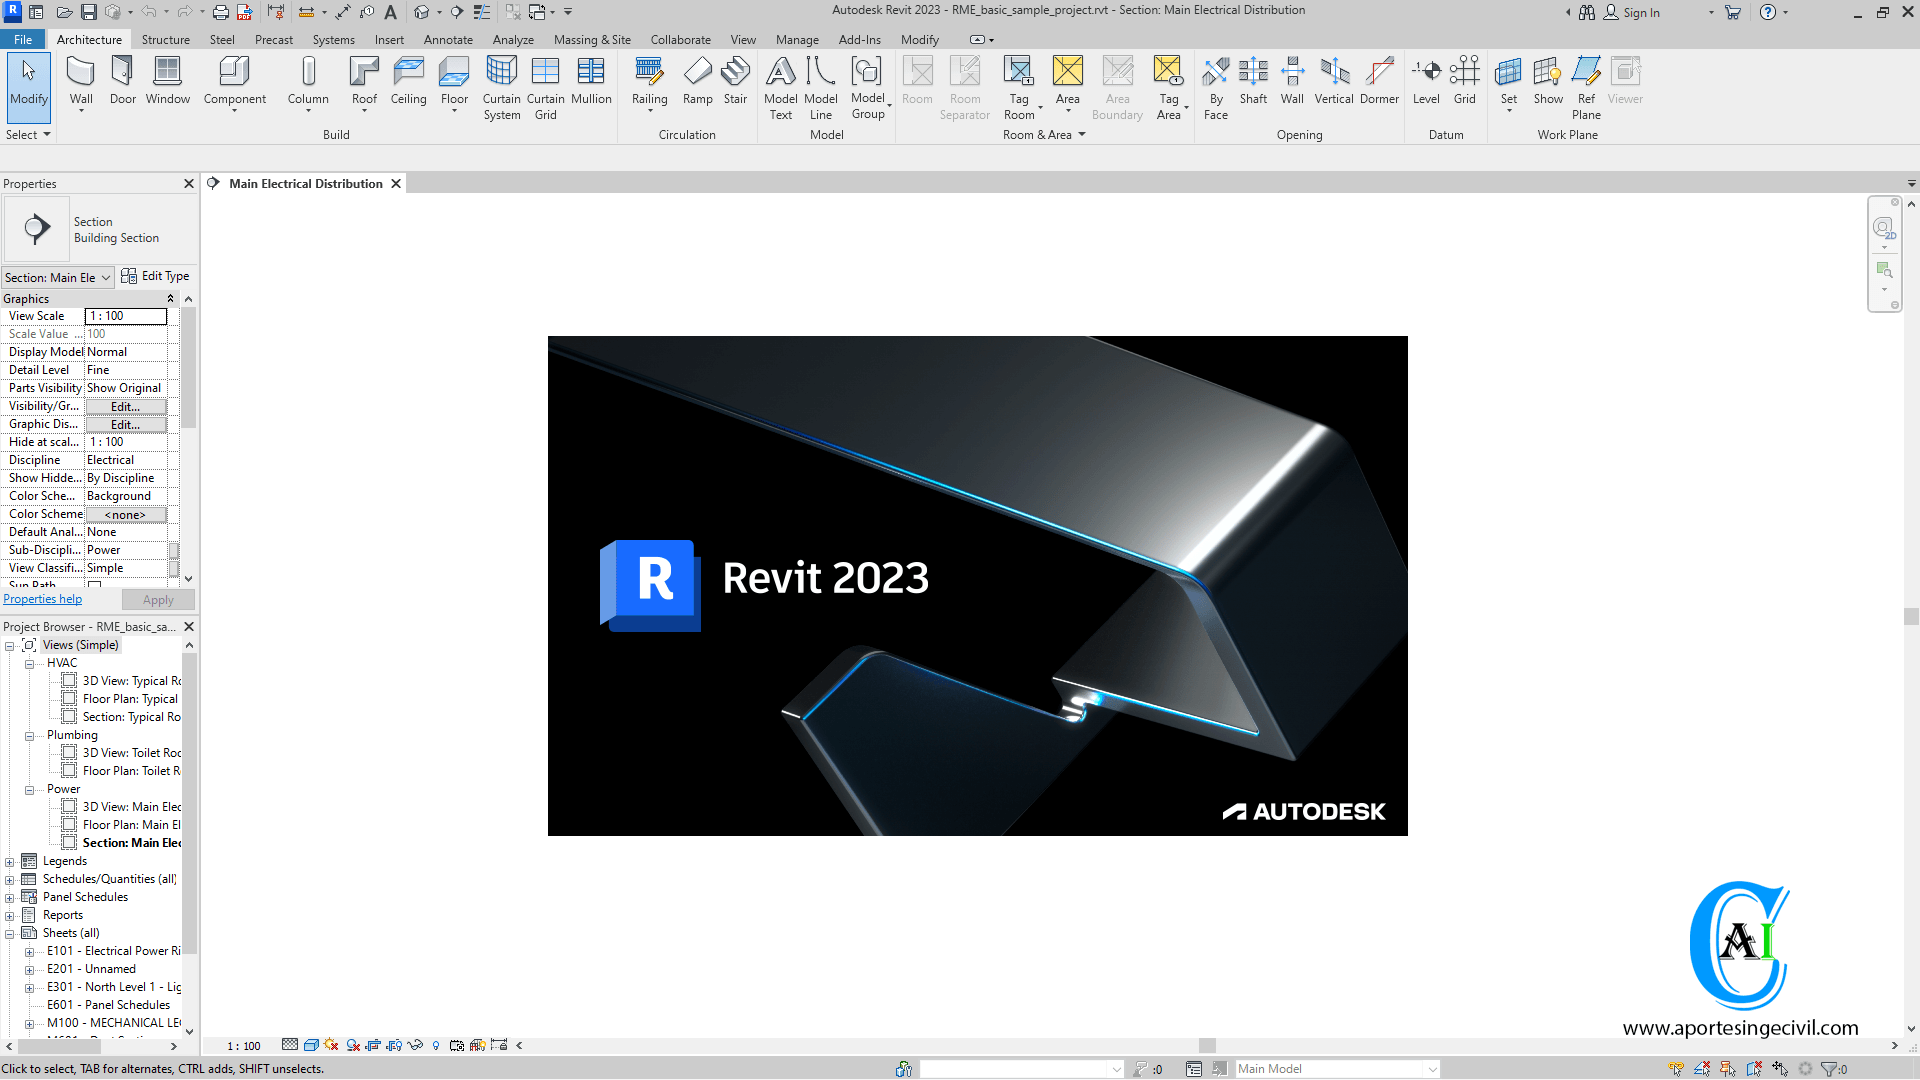 Autodesk Revit 2023 